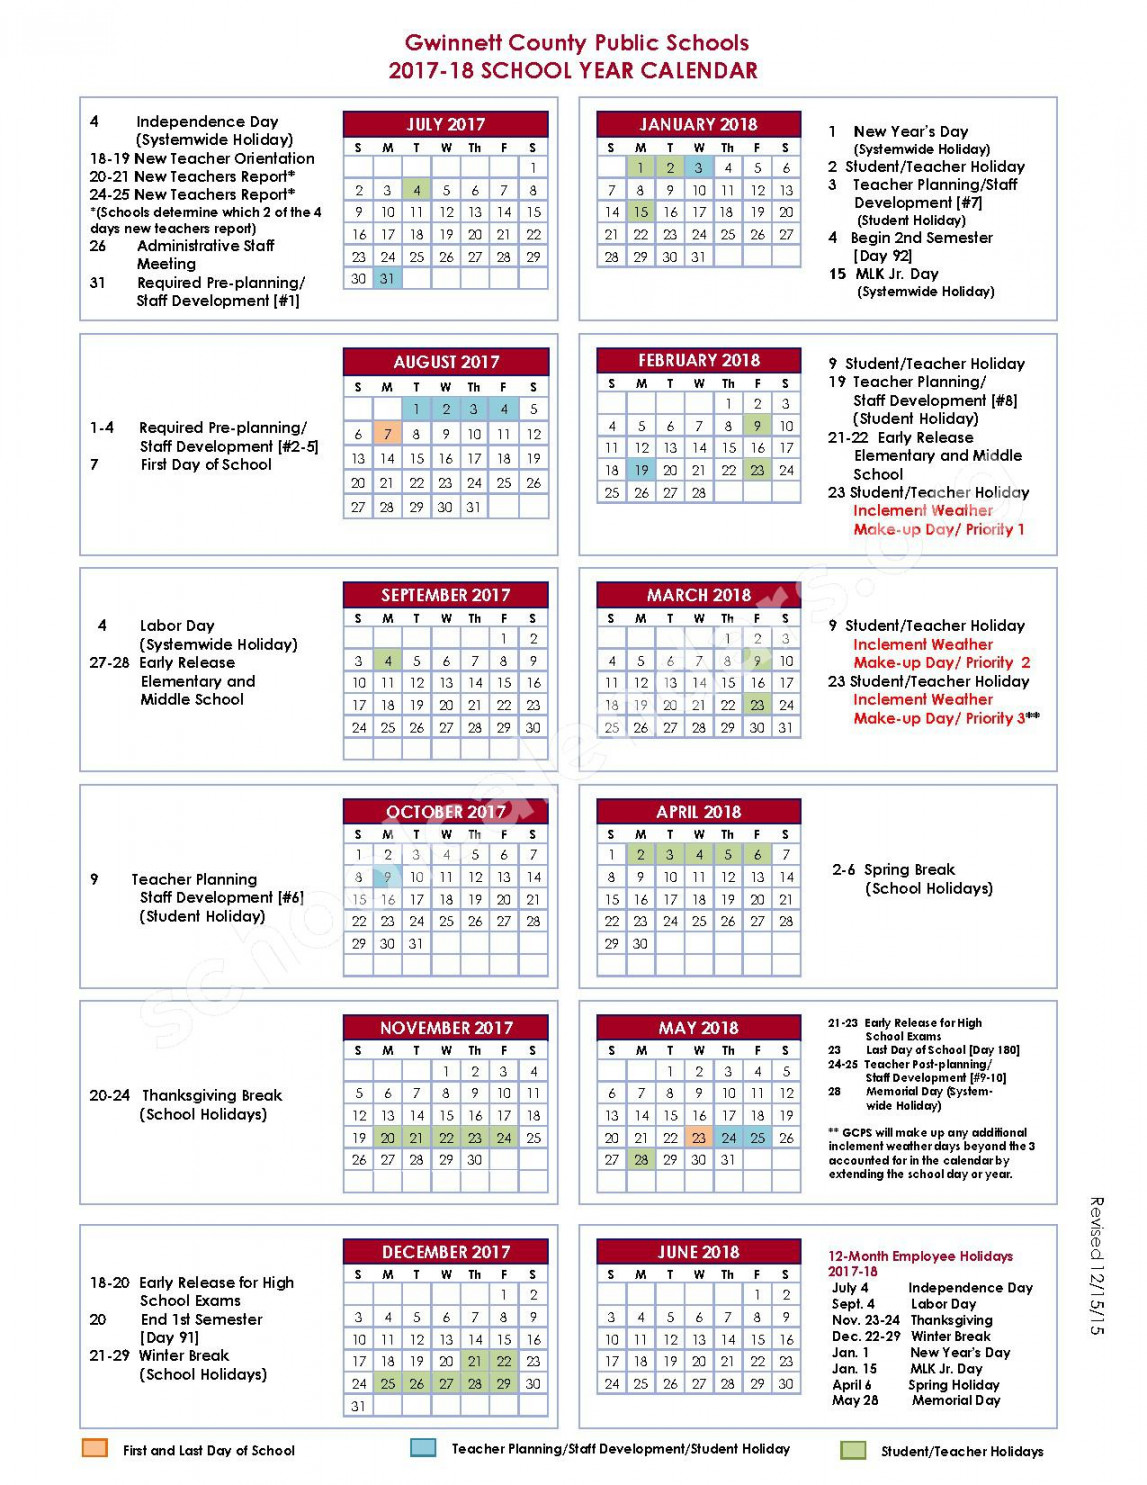 Woodward Mill Elementary School Calendars – Lawrenceville, GA